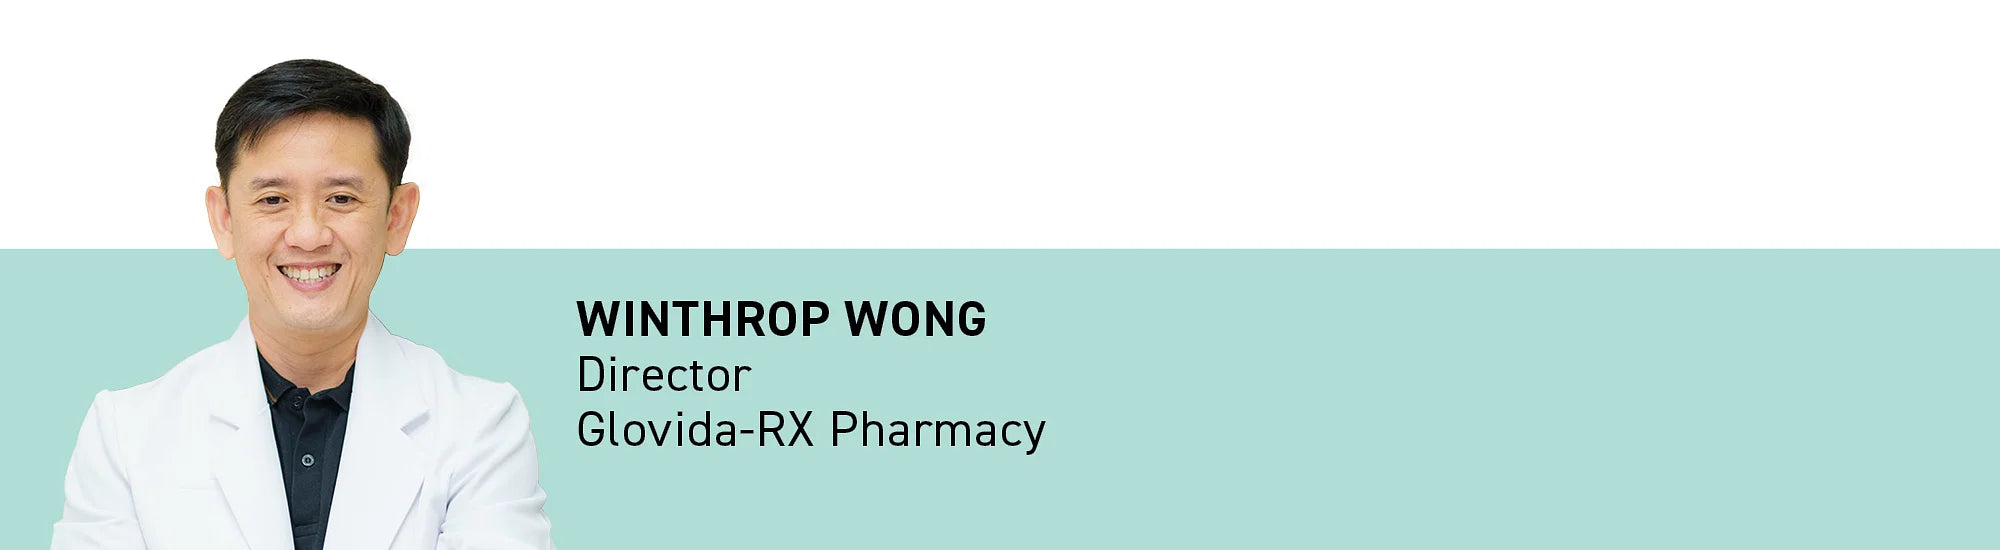 Winthrop Wong, Director, Glovida-RX Pharmacy